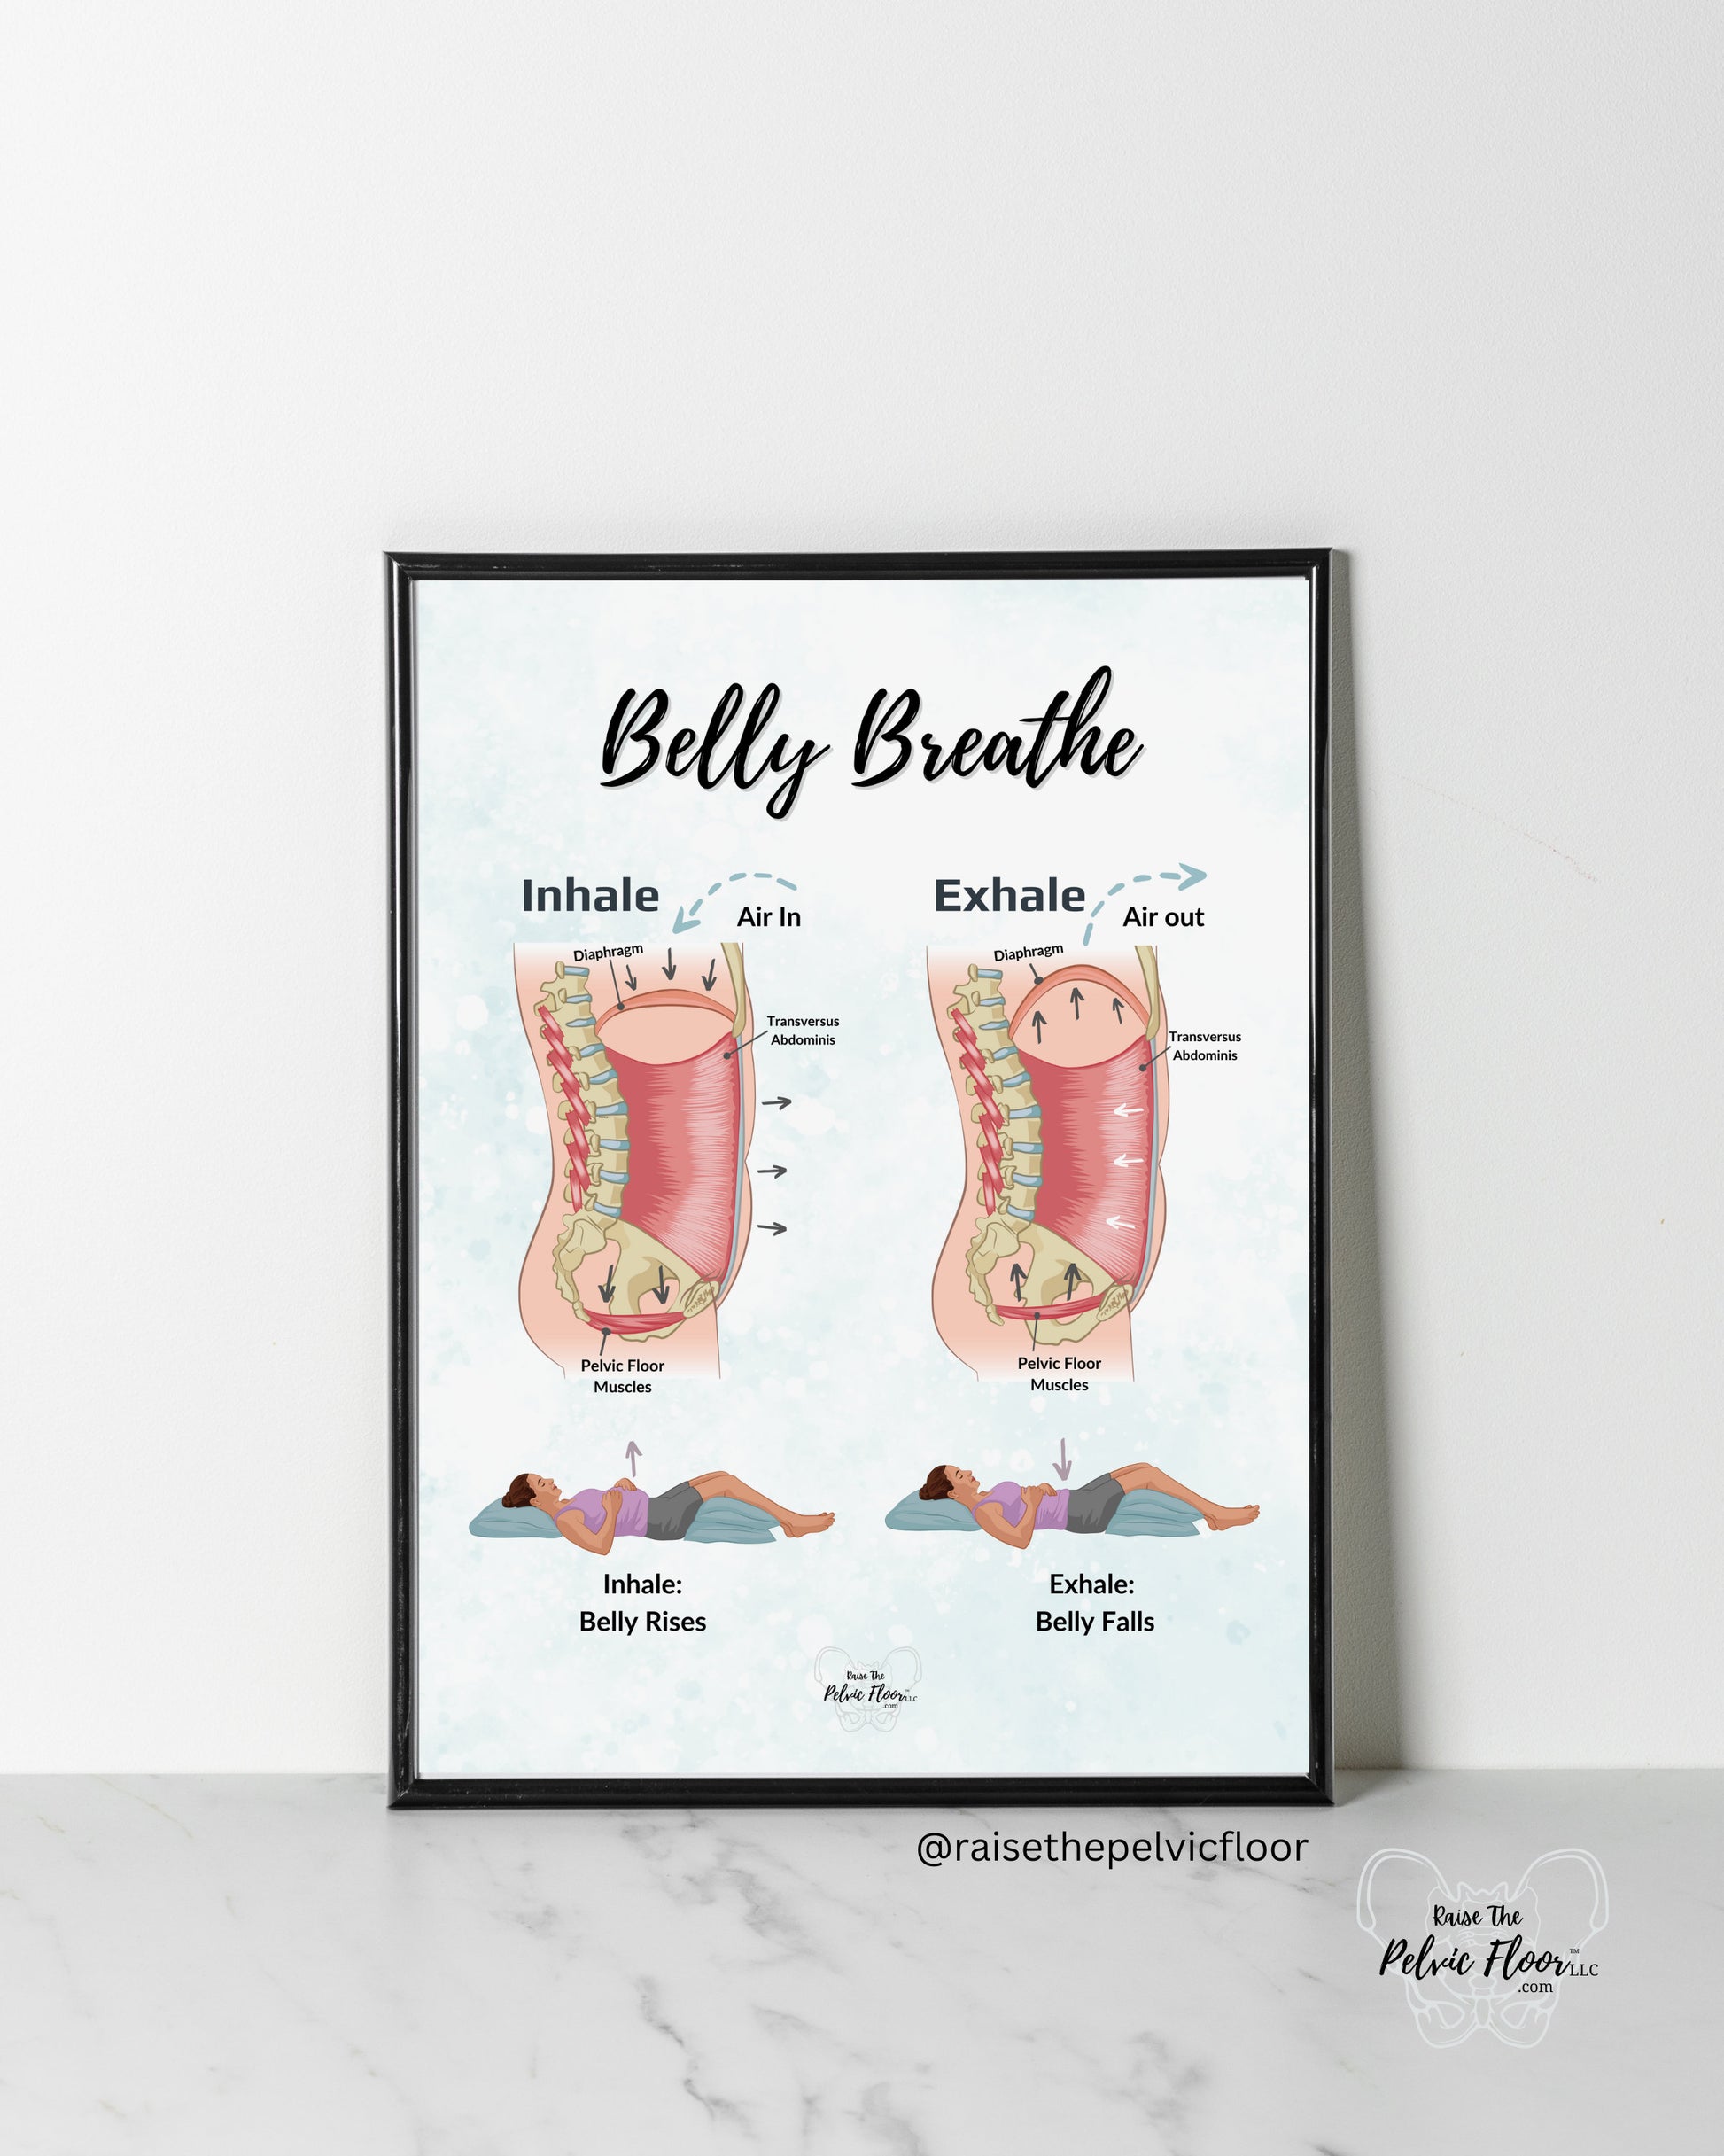 Belly Breathe Pathophysiology Inhale Exhale Education Poster | Pelvic Floor, Diaphragm, Breath, Belly Rise, Relax, Yoga, Meditation